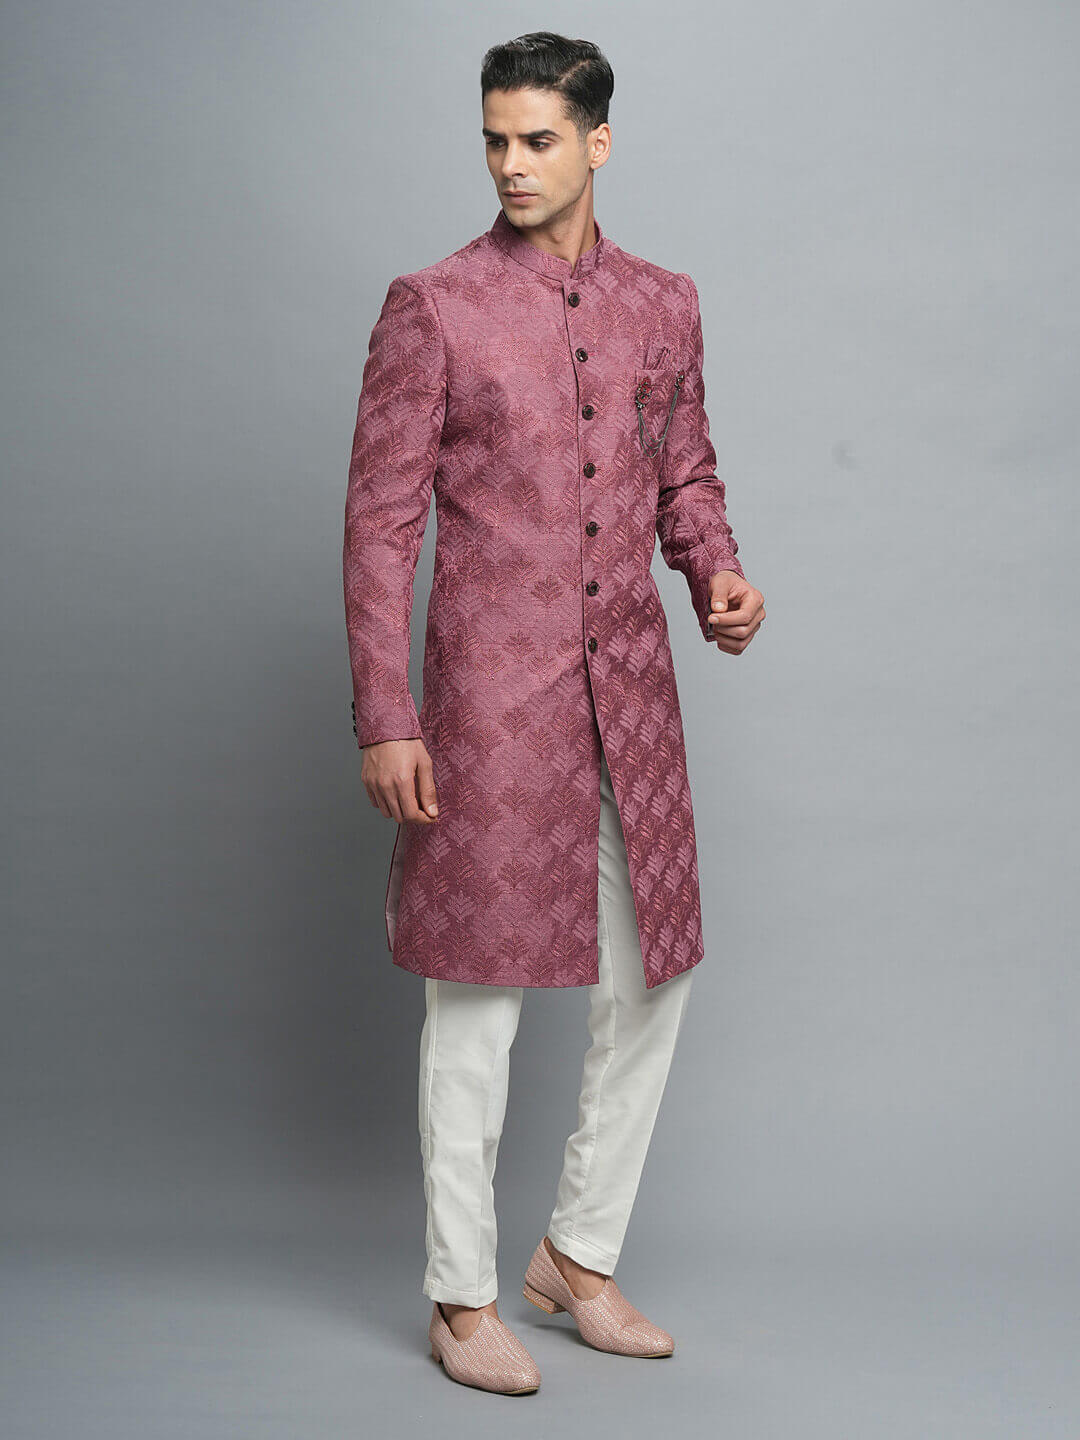 Pink Embroidered Sherwani